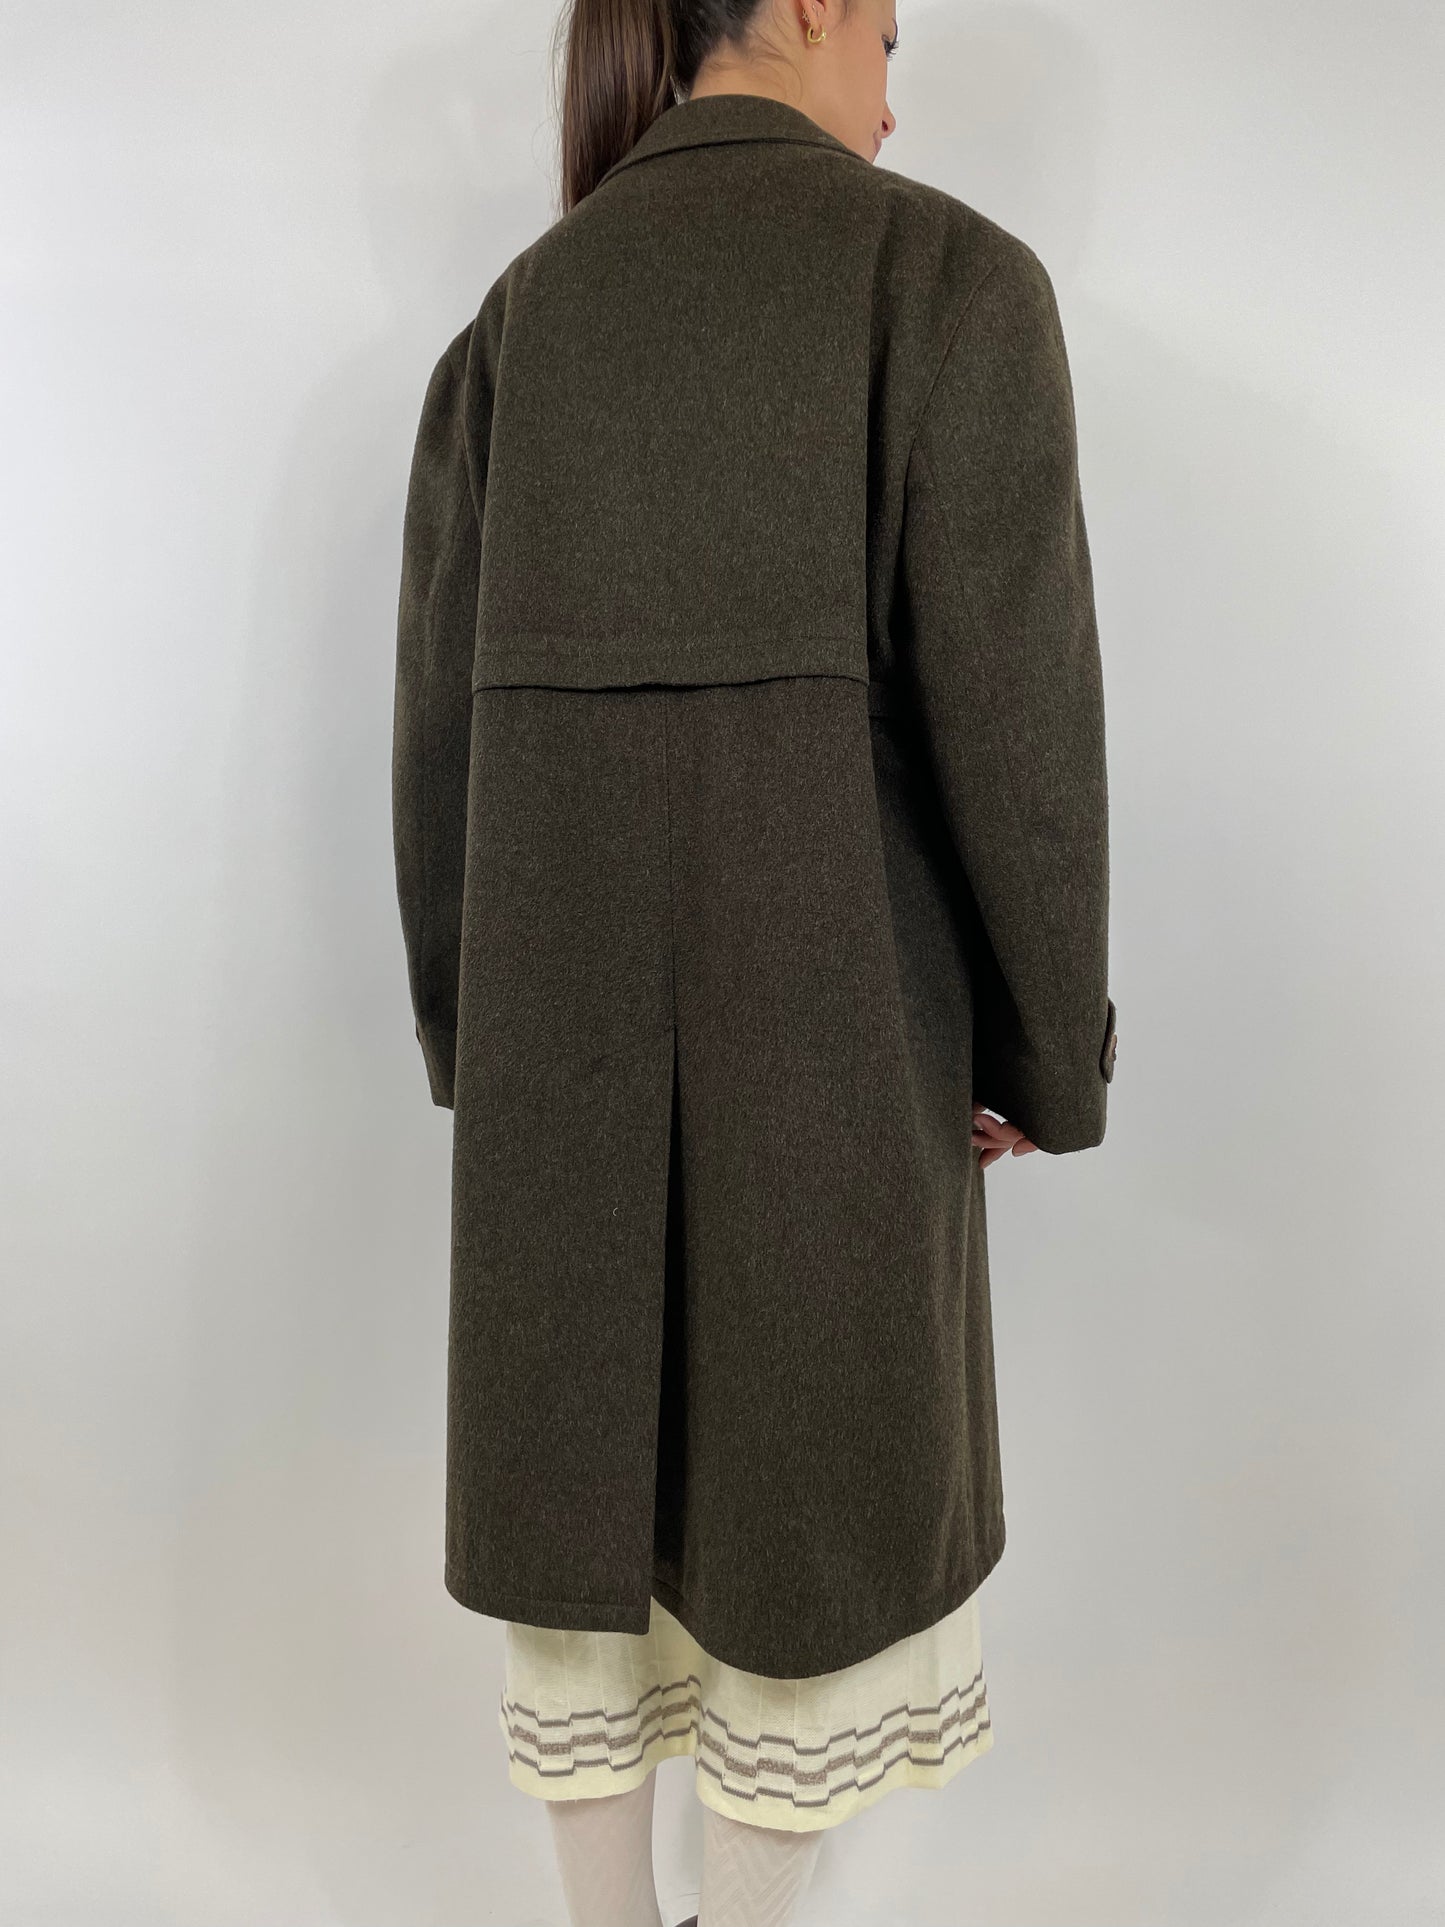 Tyrol Loden coat